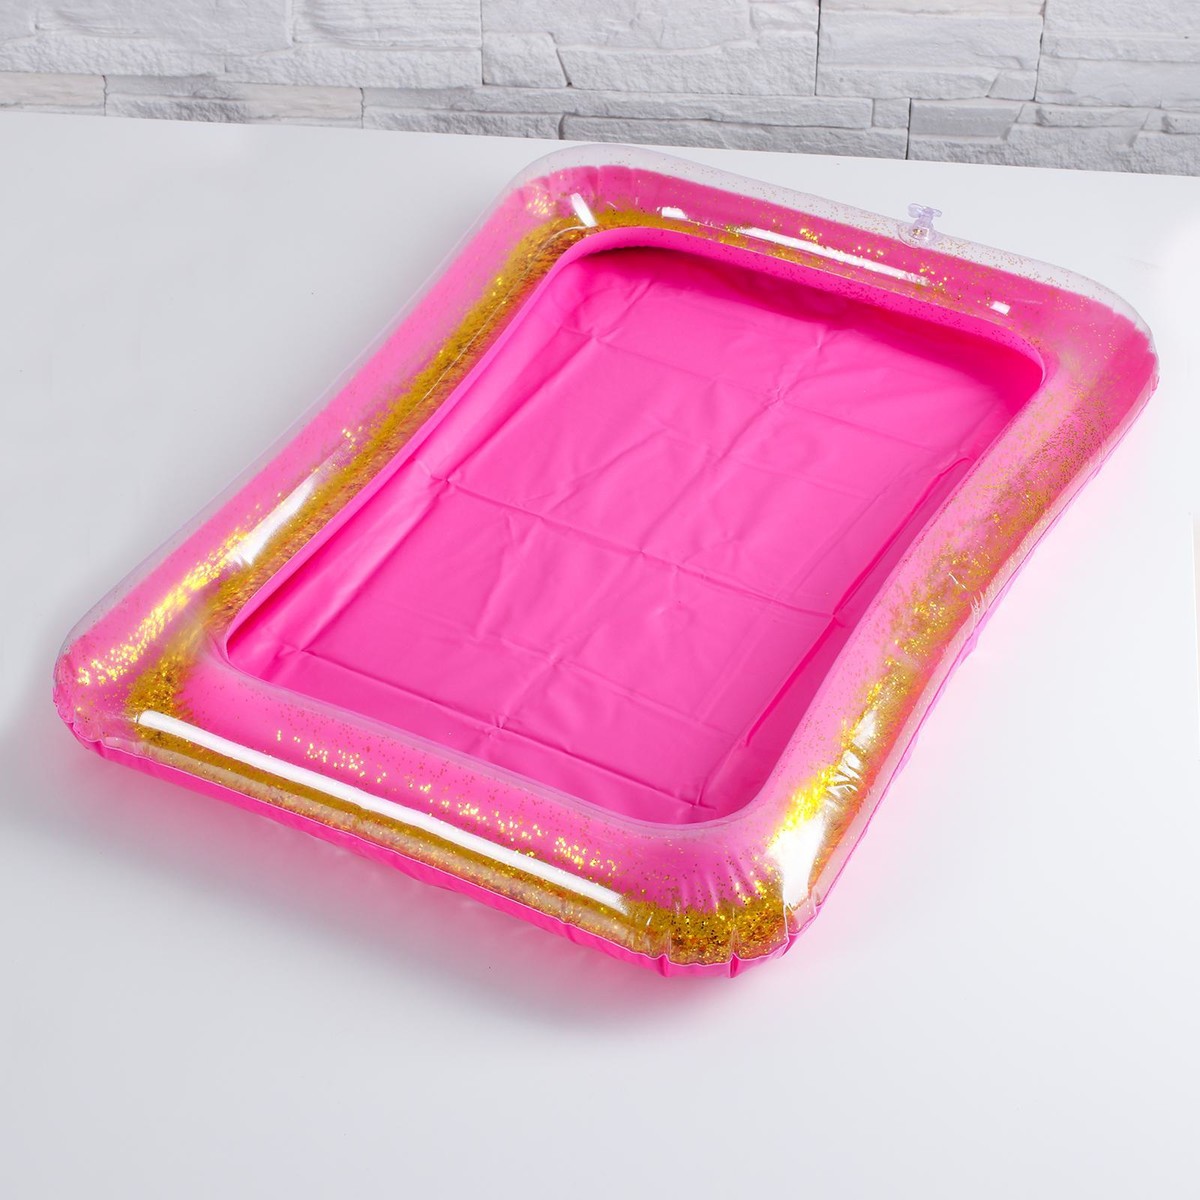 Надувная песочница с блестками, 60х45 см, цвет ярко-розовый надувная песочница с блестками 60х45 см ярко розовый